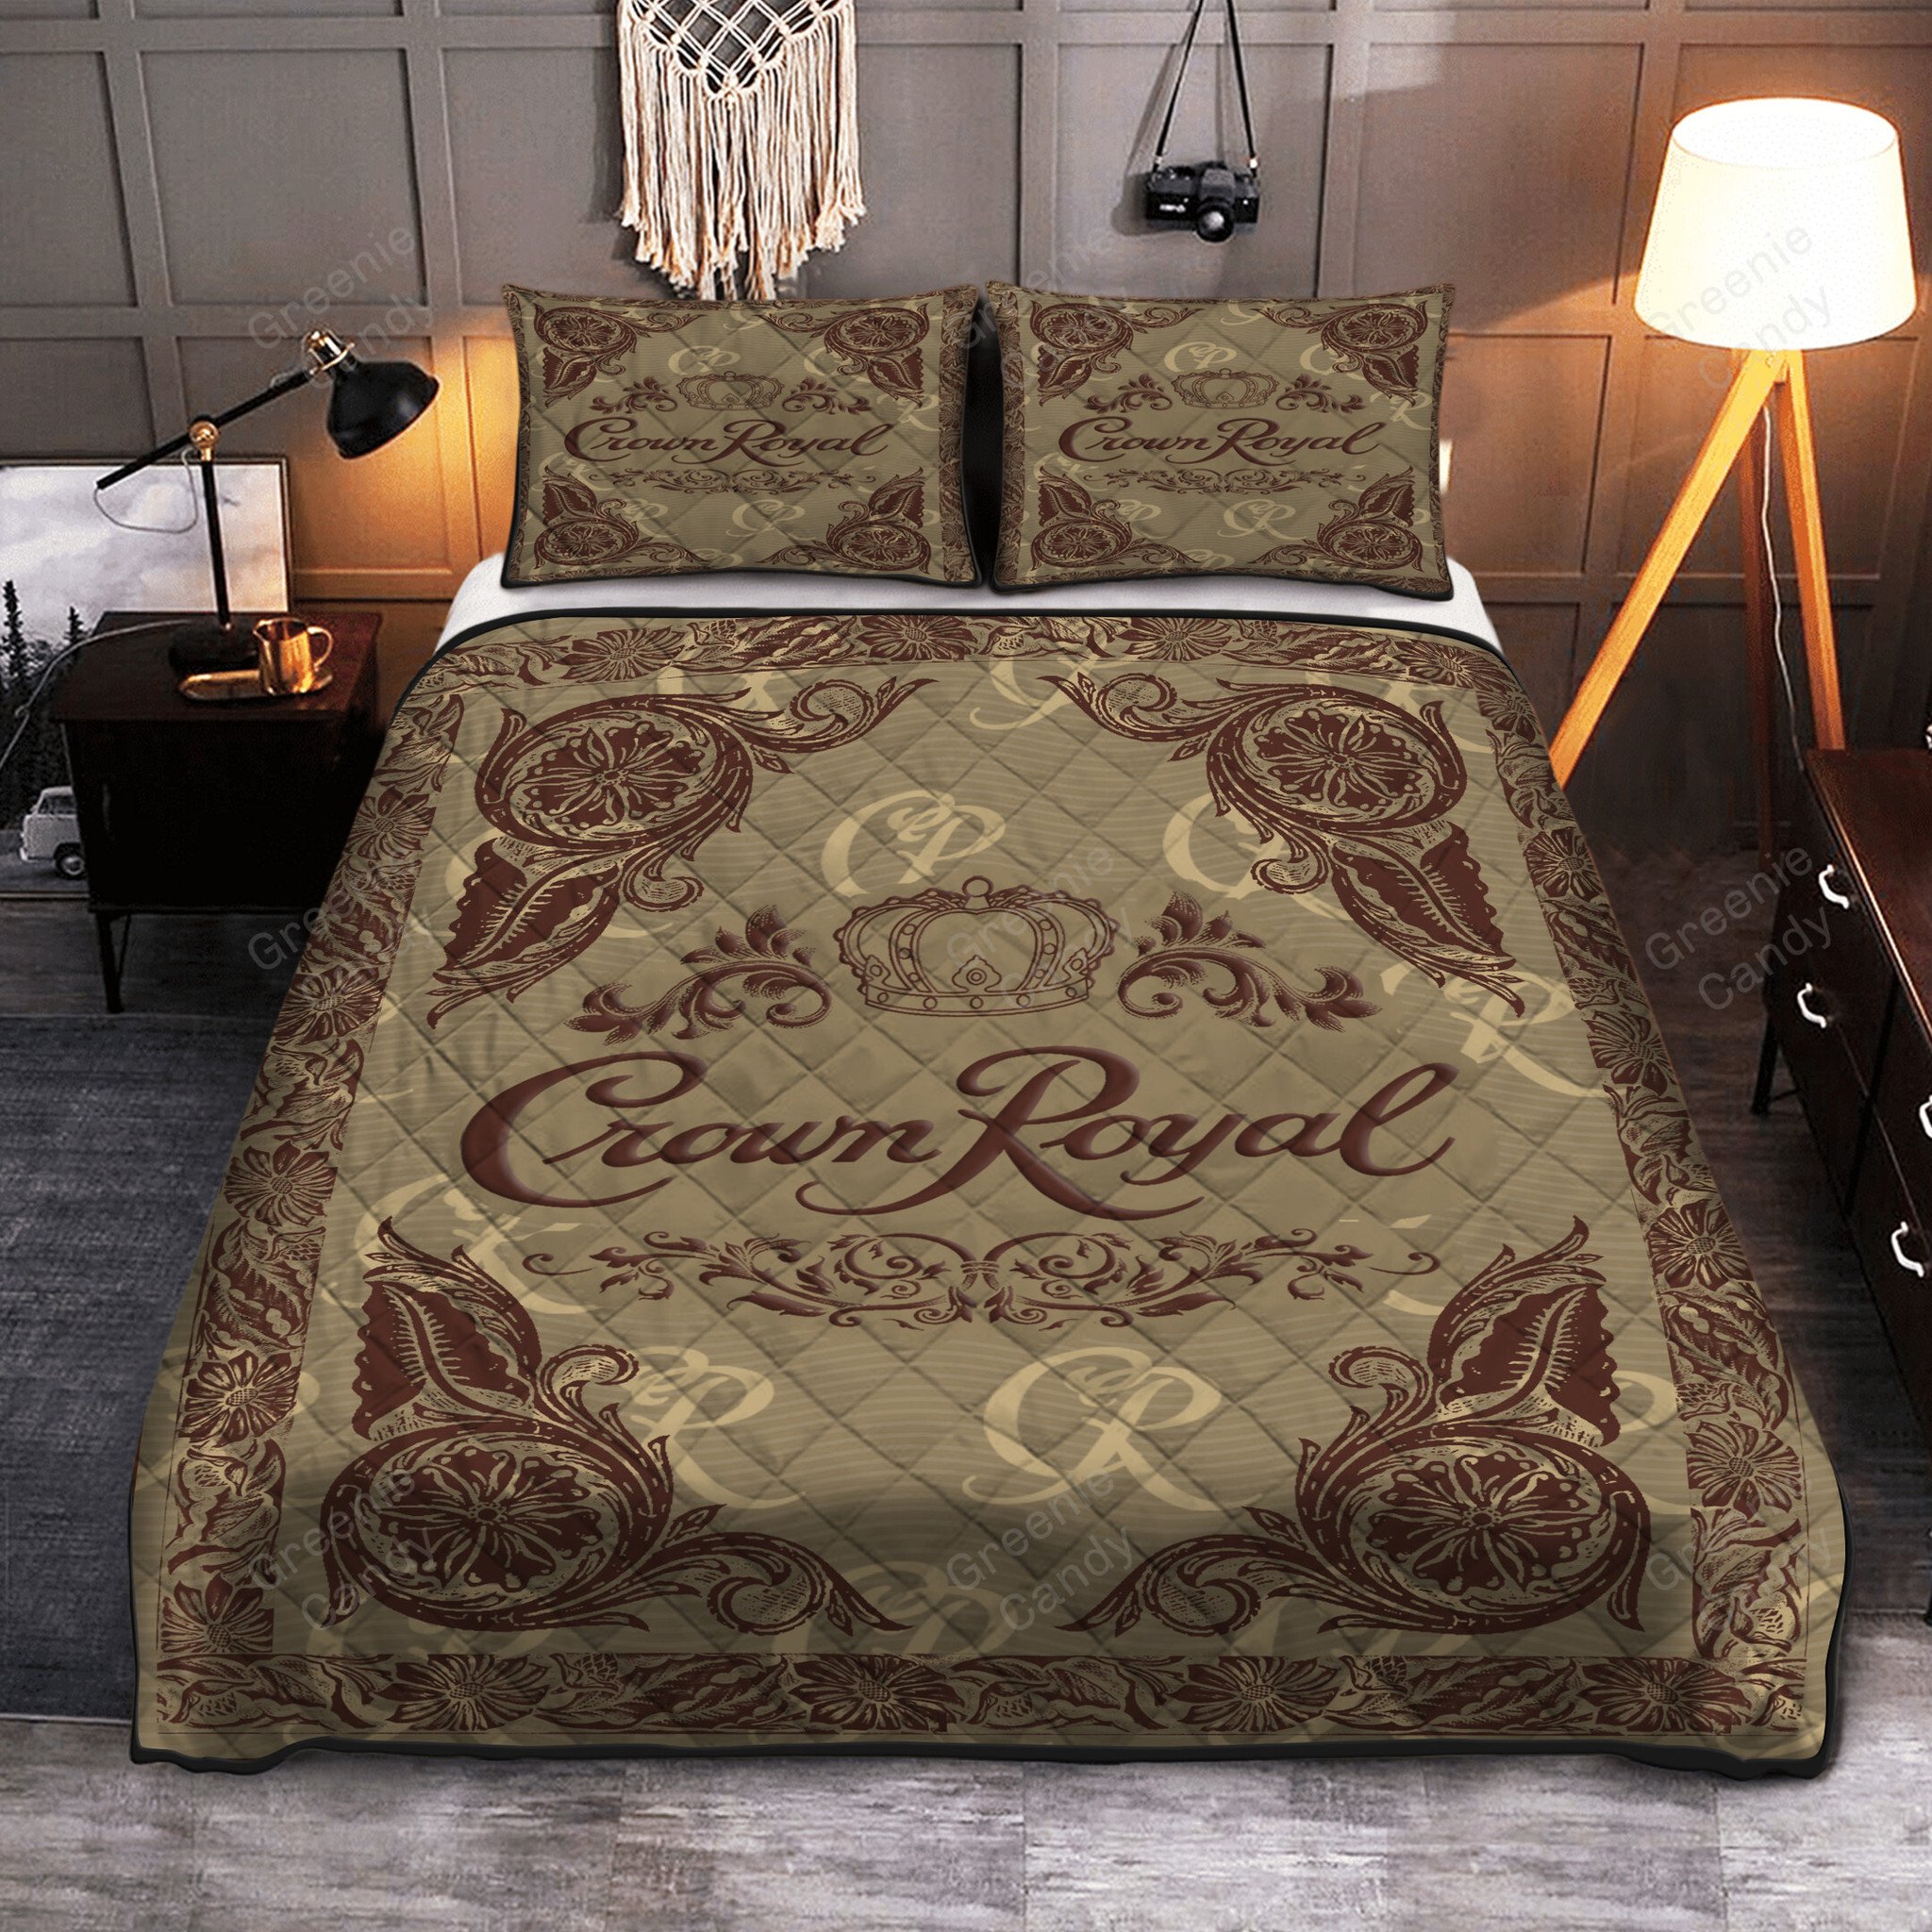 NEW Crown Royal Vanilla Whiskey Bedding Set 3